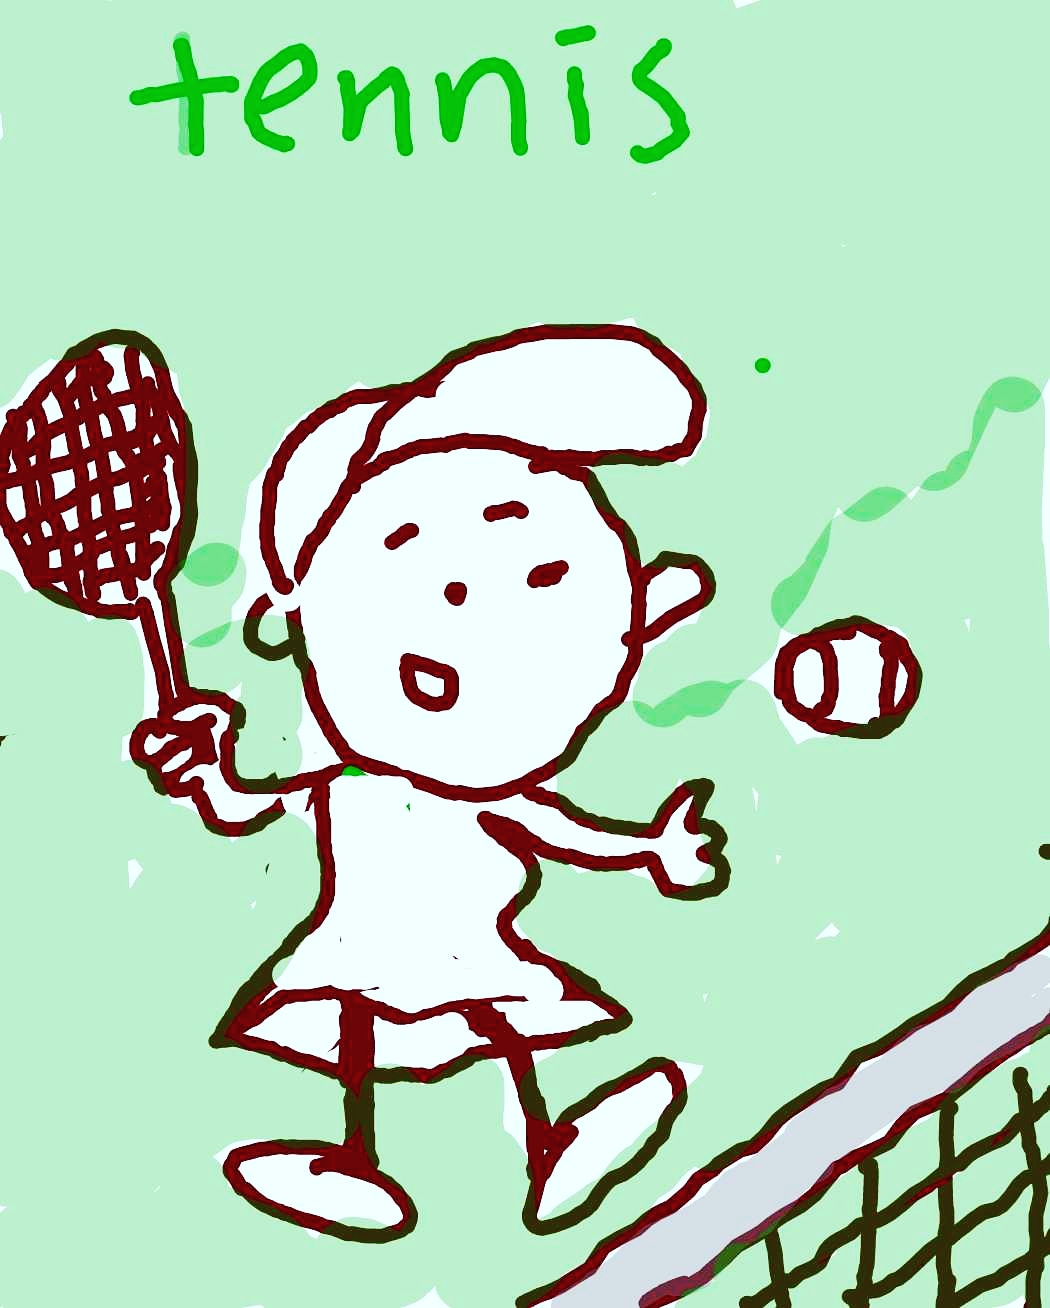 tennis 